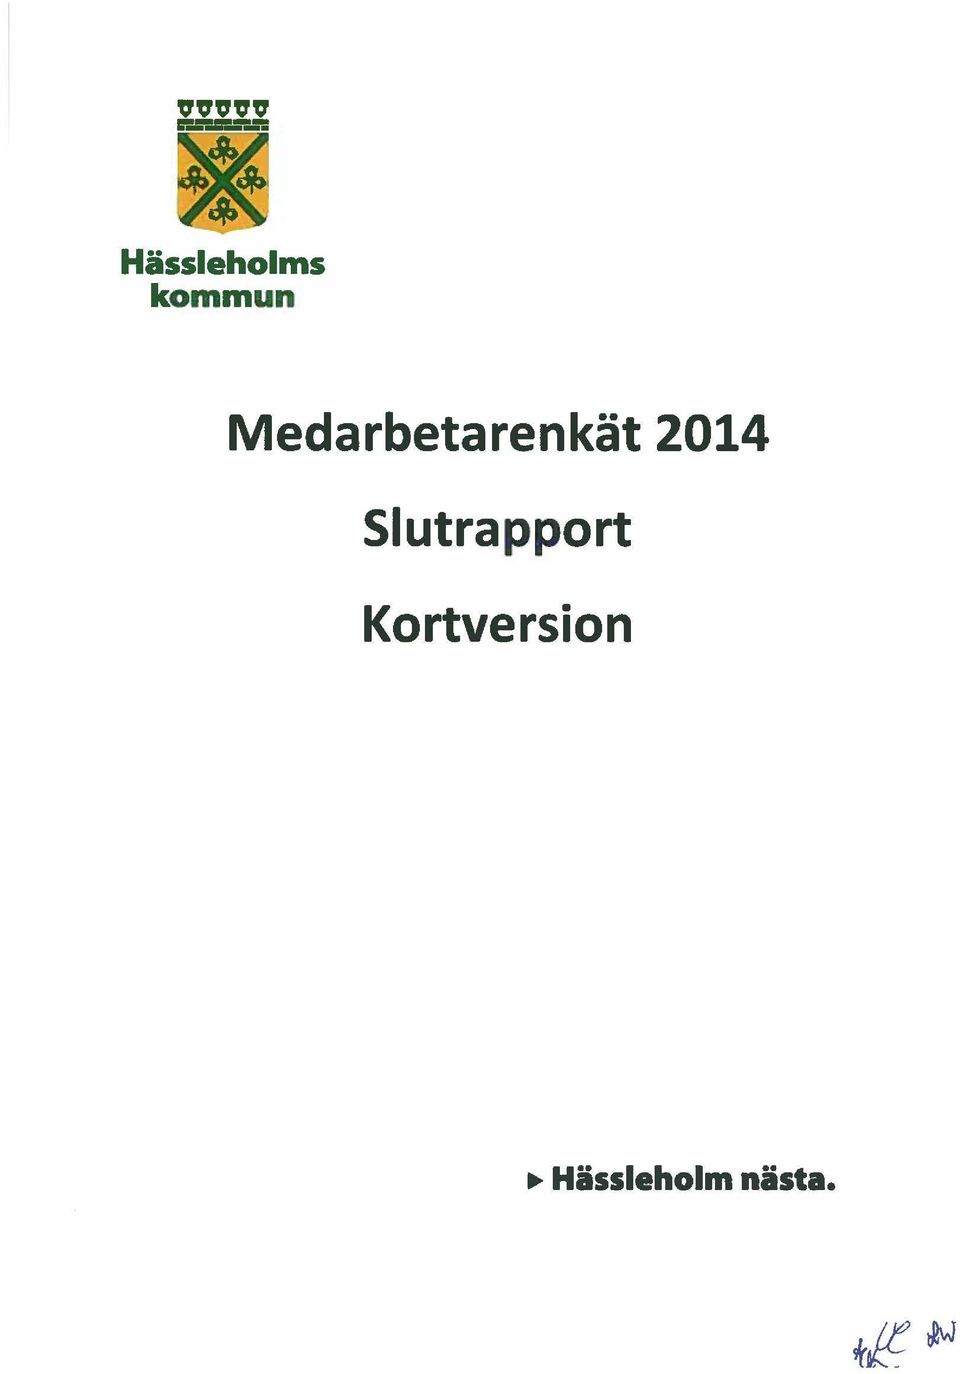 2014 slutrapport